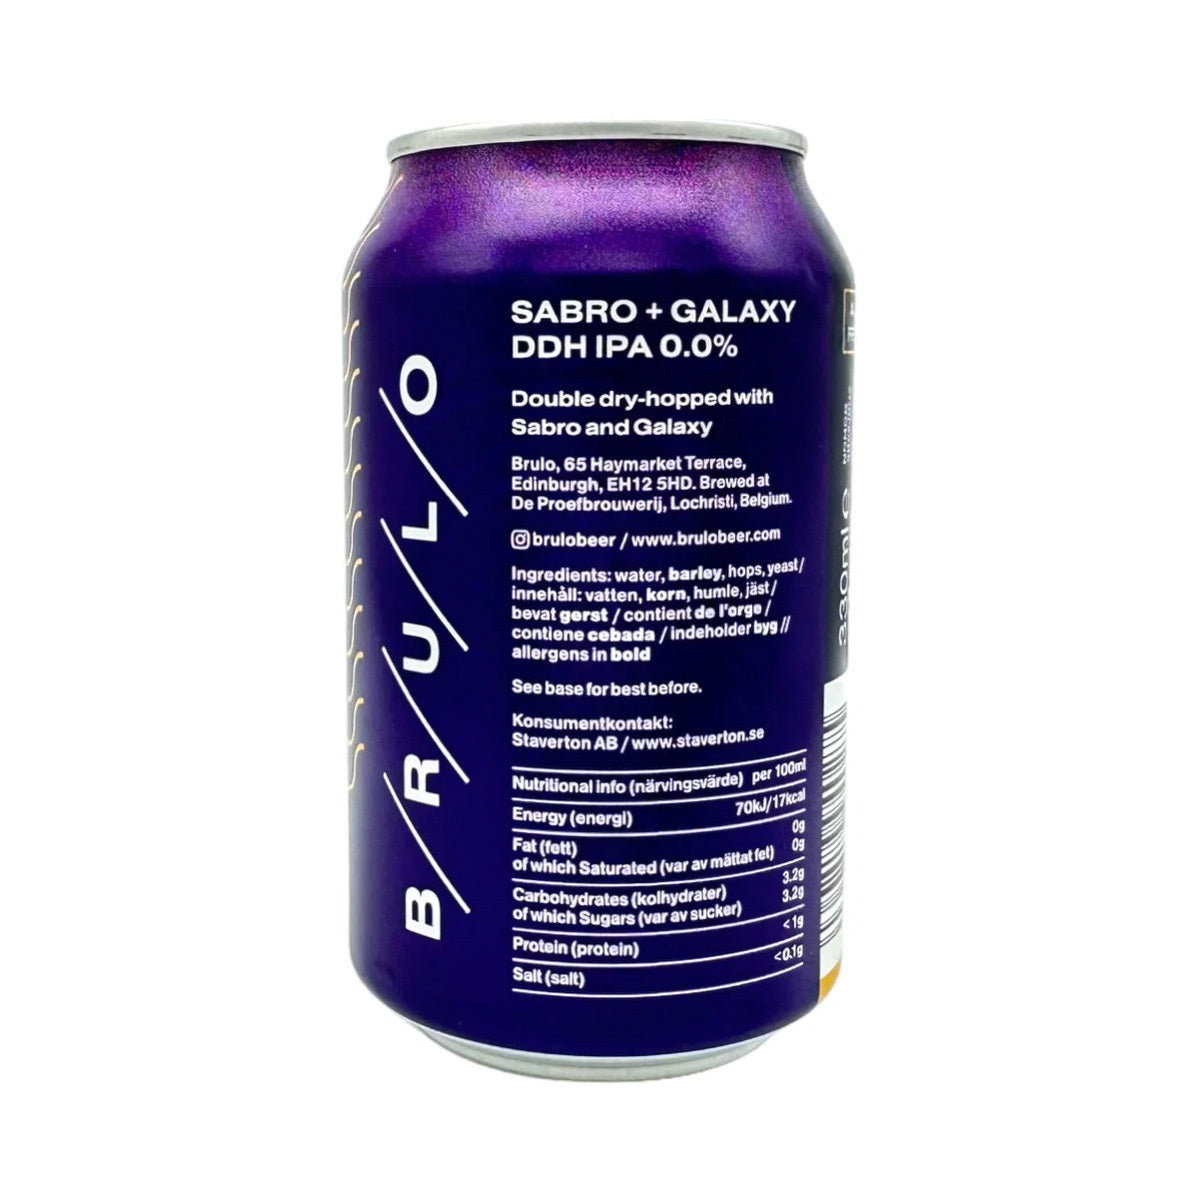 Brulo Sabro Galaxy DDH IPA - Alcohol Free IPA